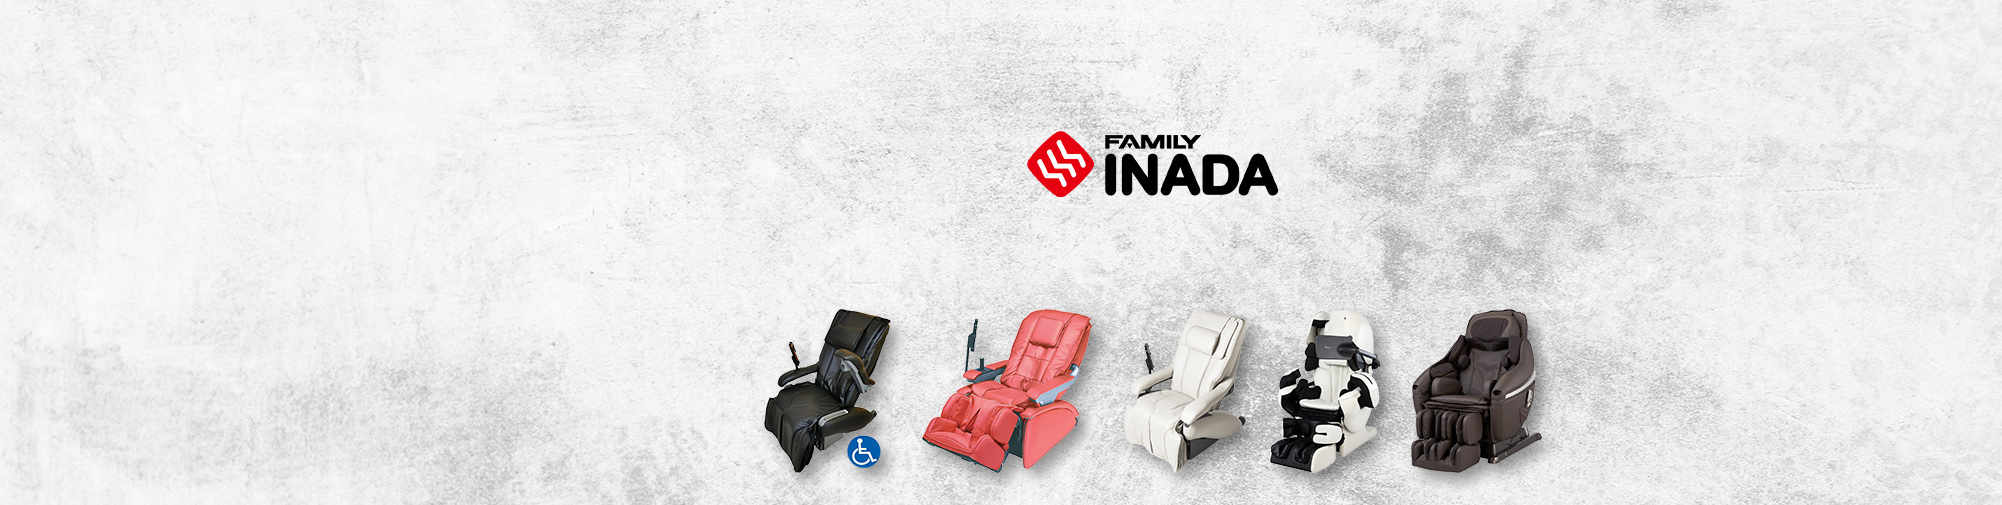 Familie Inada - traditioneel Japans bedrijf | Massage Chair World